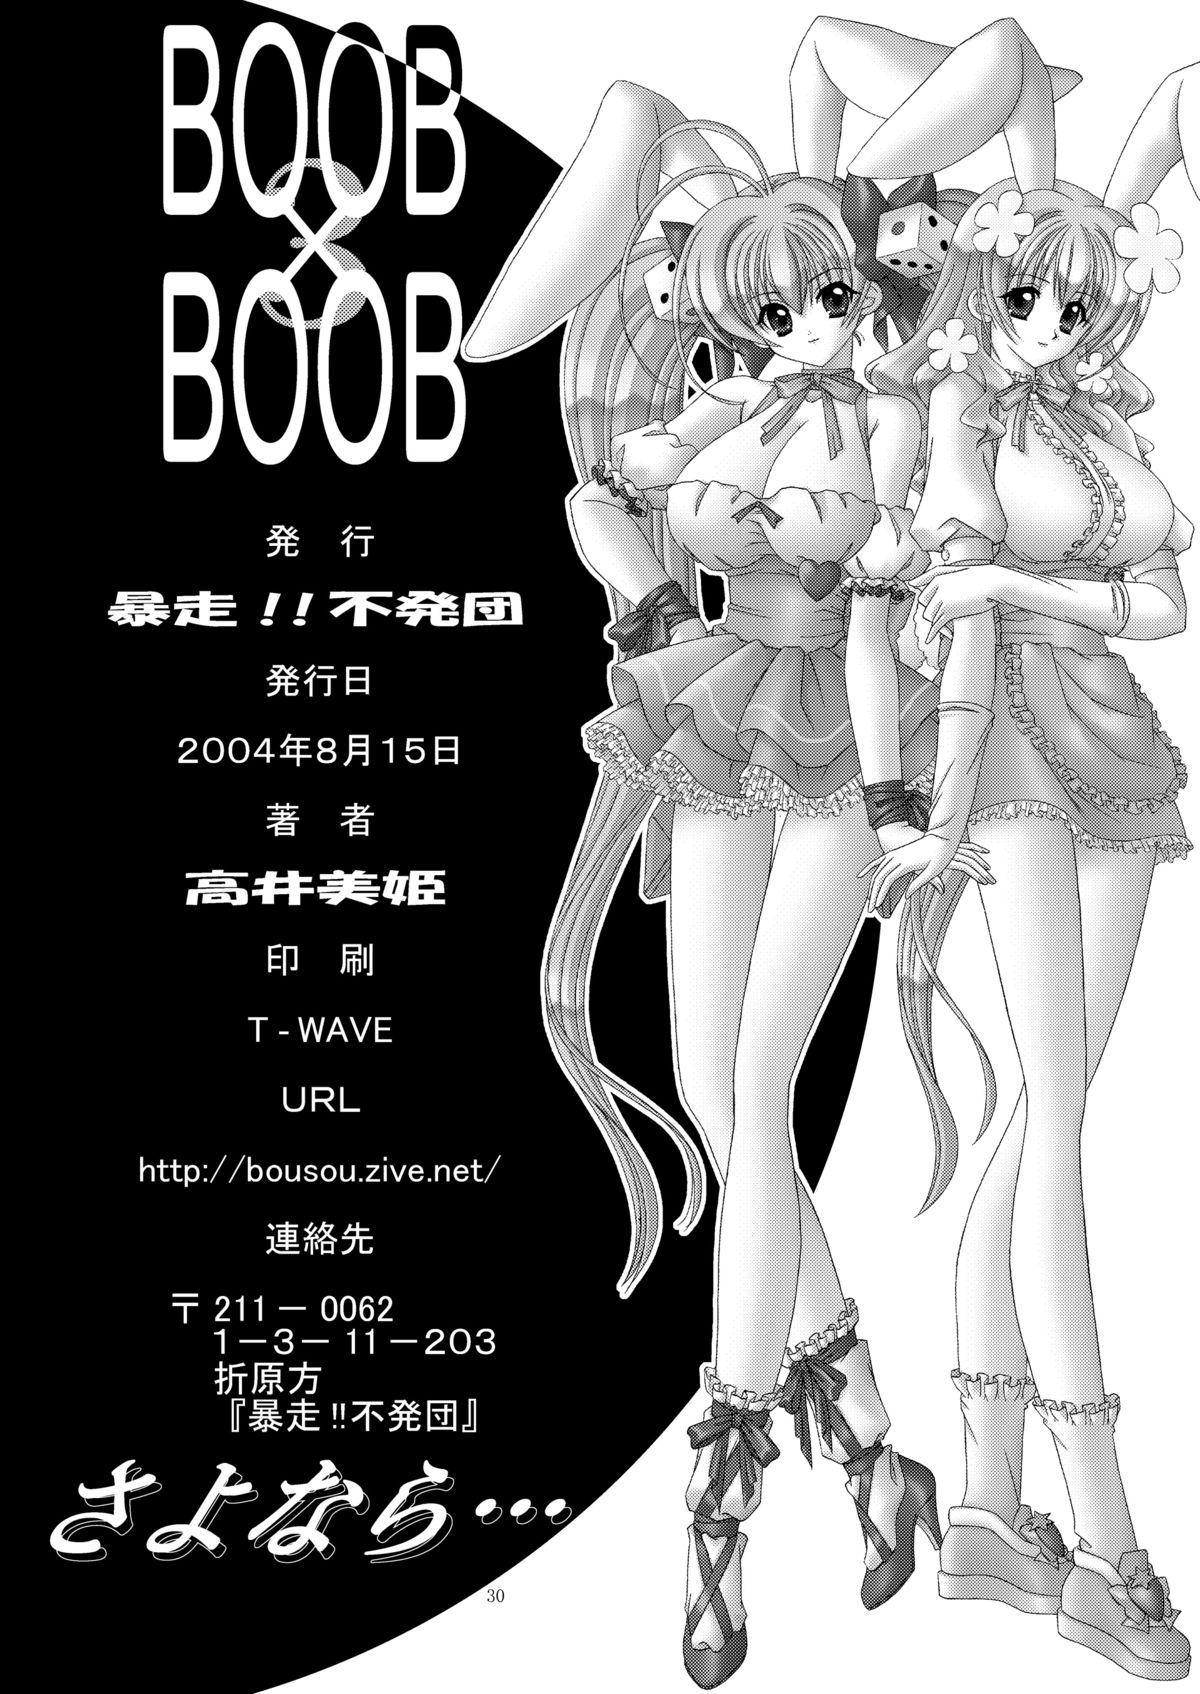 BOOB×BOOB 3 30